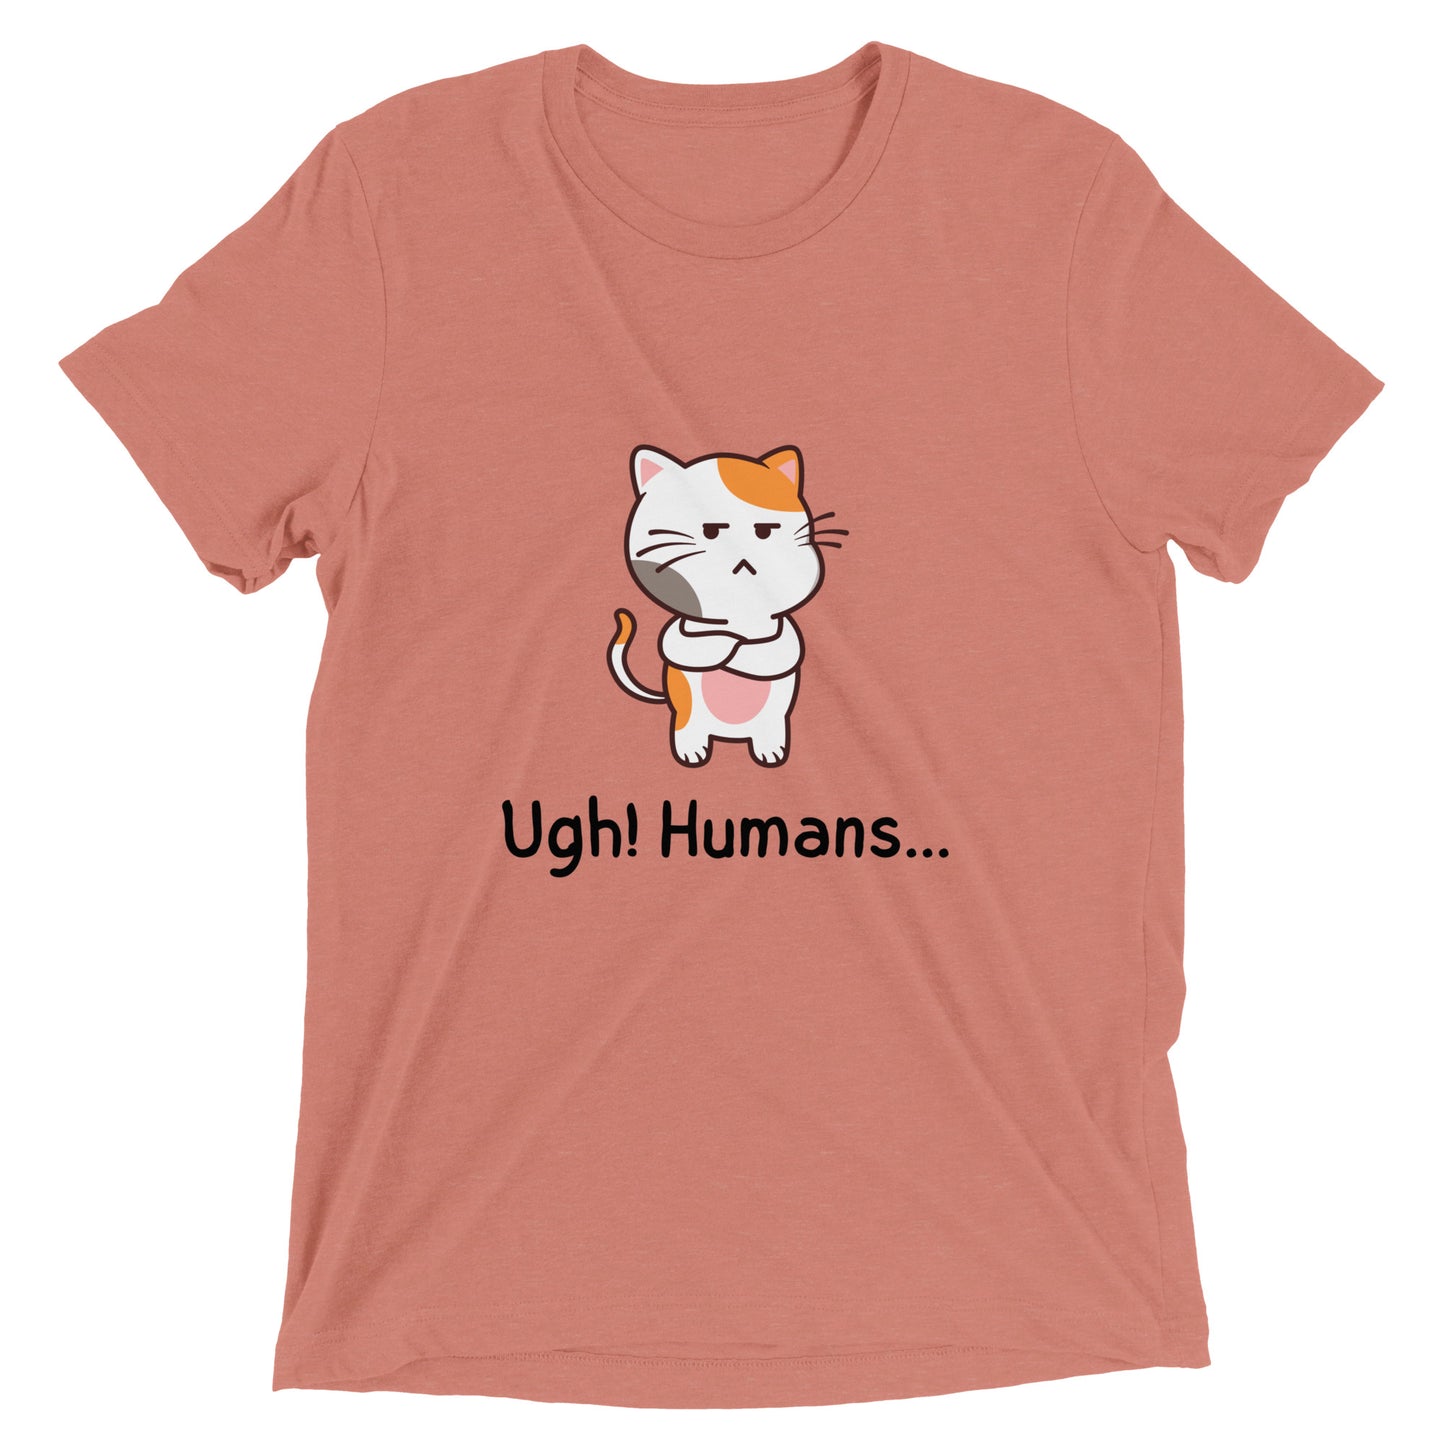 Cat, Angry, Depressed, Sassy, Grumpy Cat, Meme, Relatable, Animal, Unisex, T-shirt